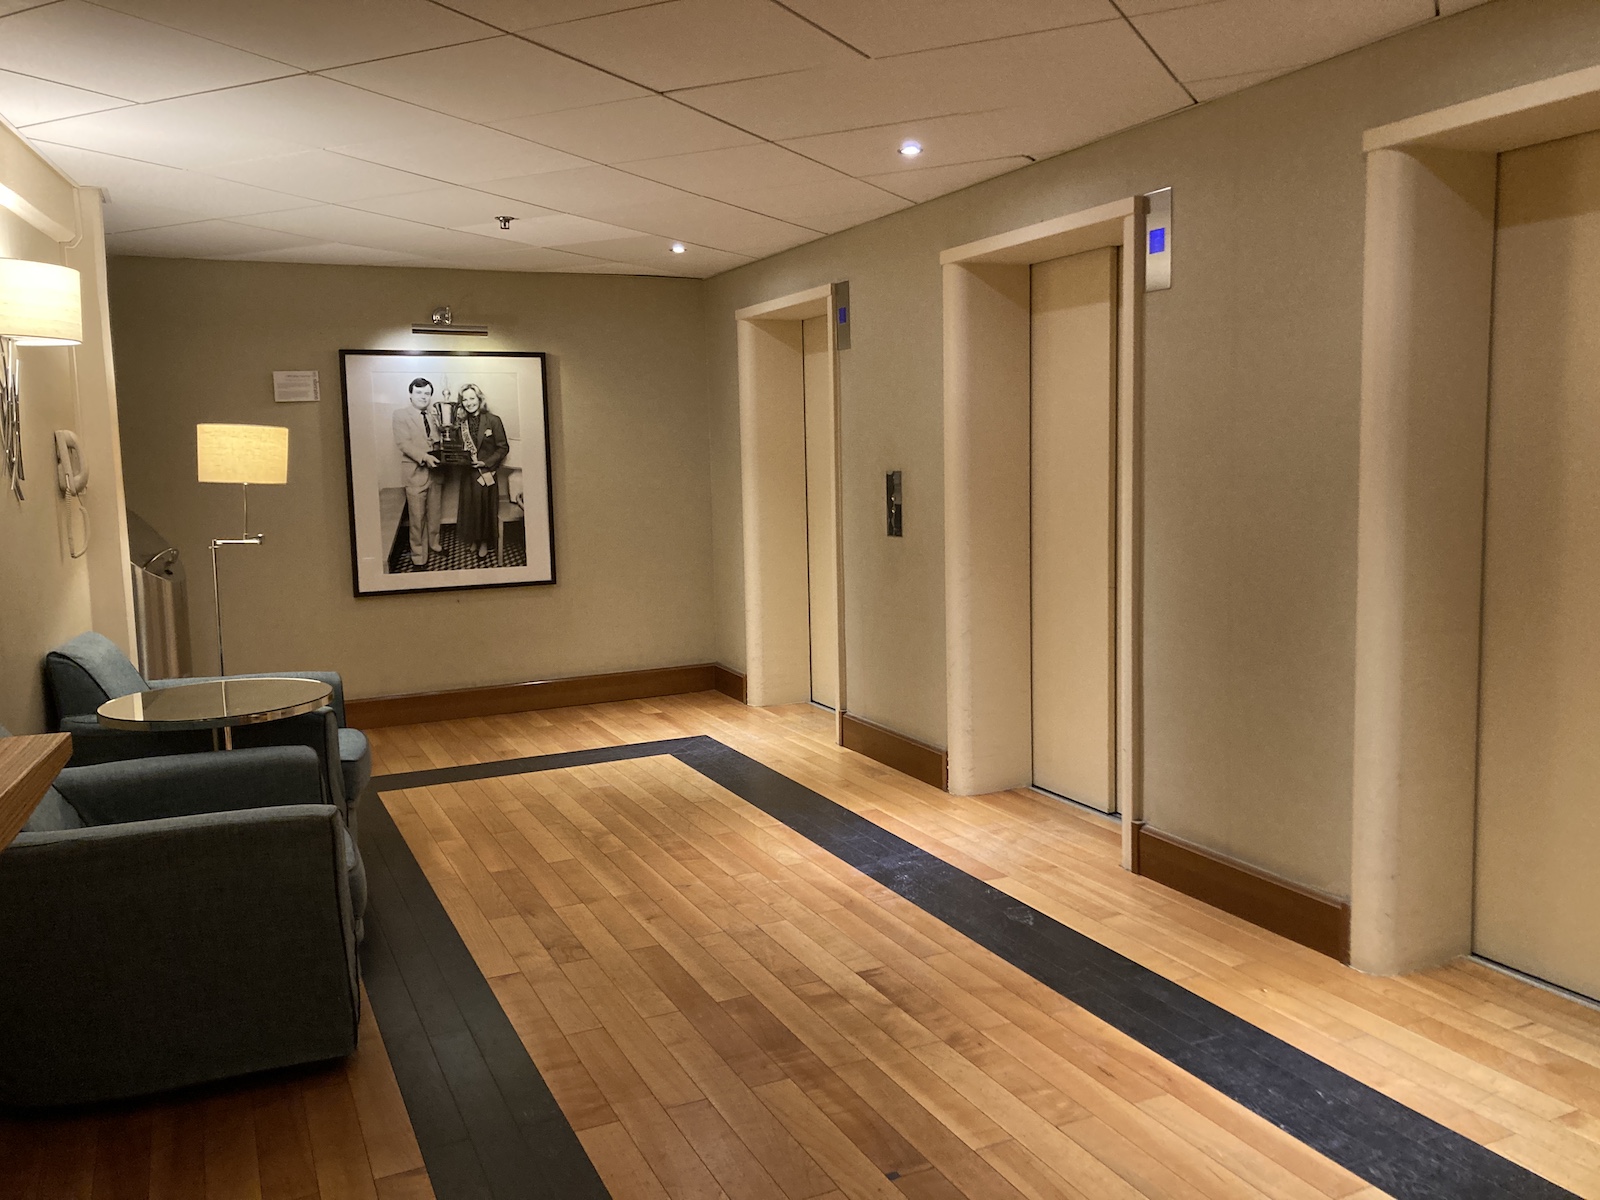 Image of elevator waiting area on 5th floor of Sheraton Stockholm Hotel